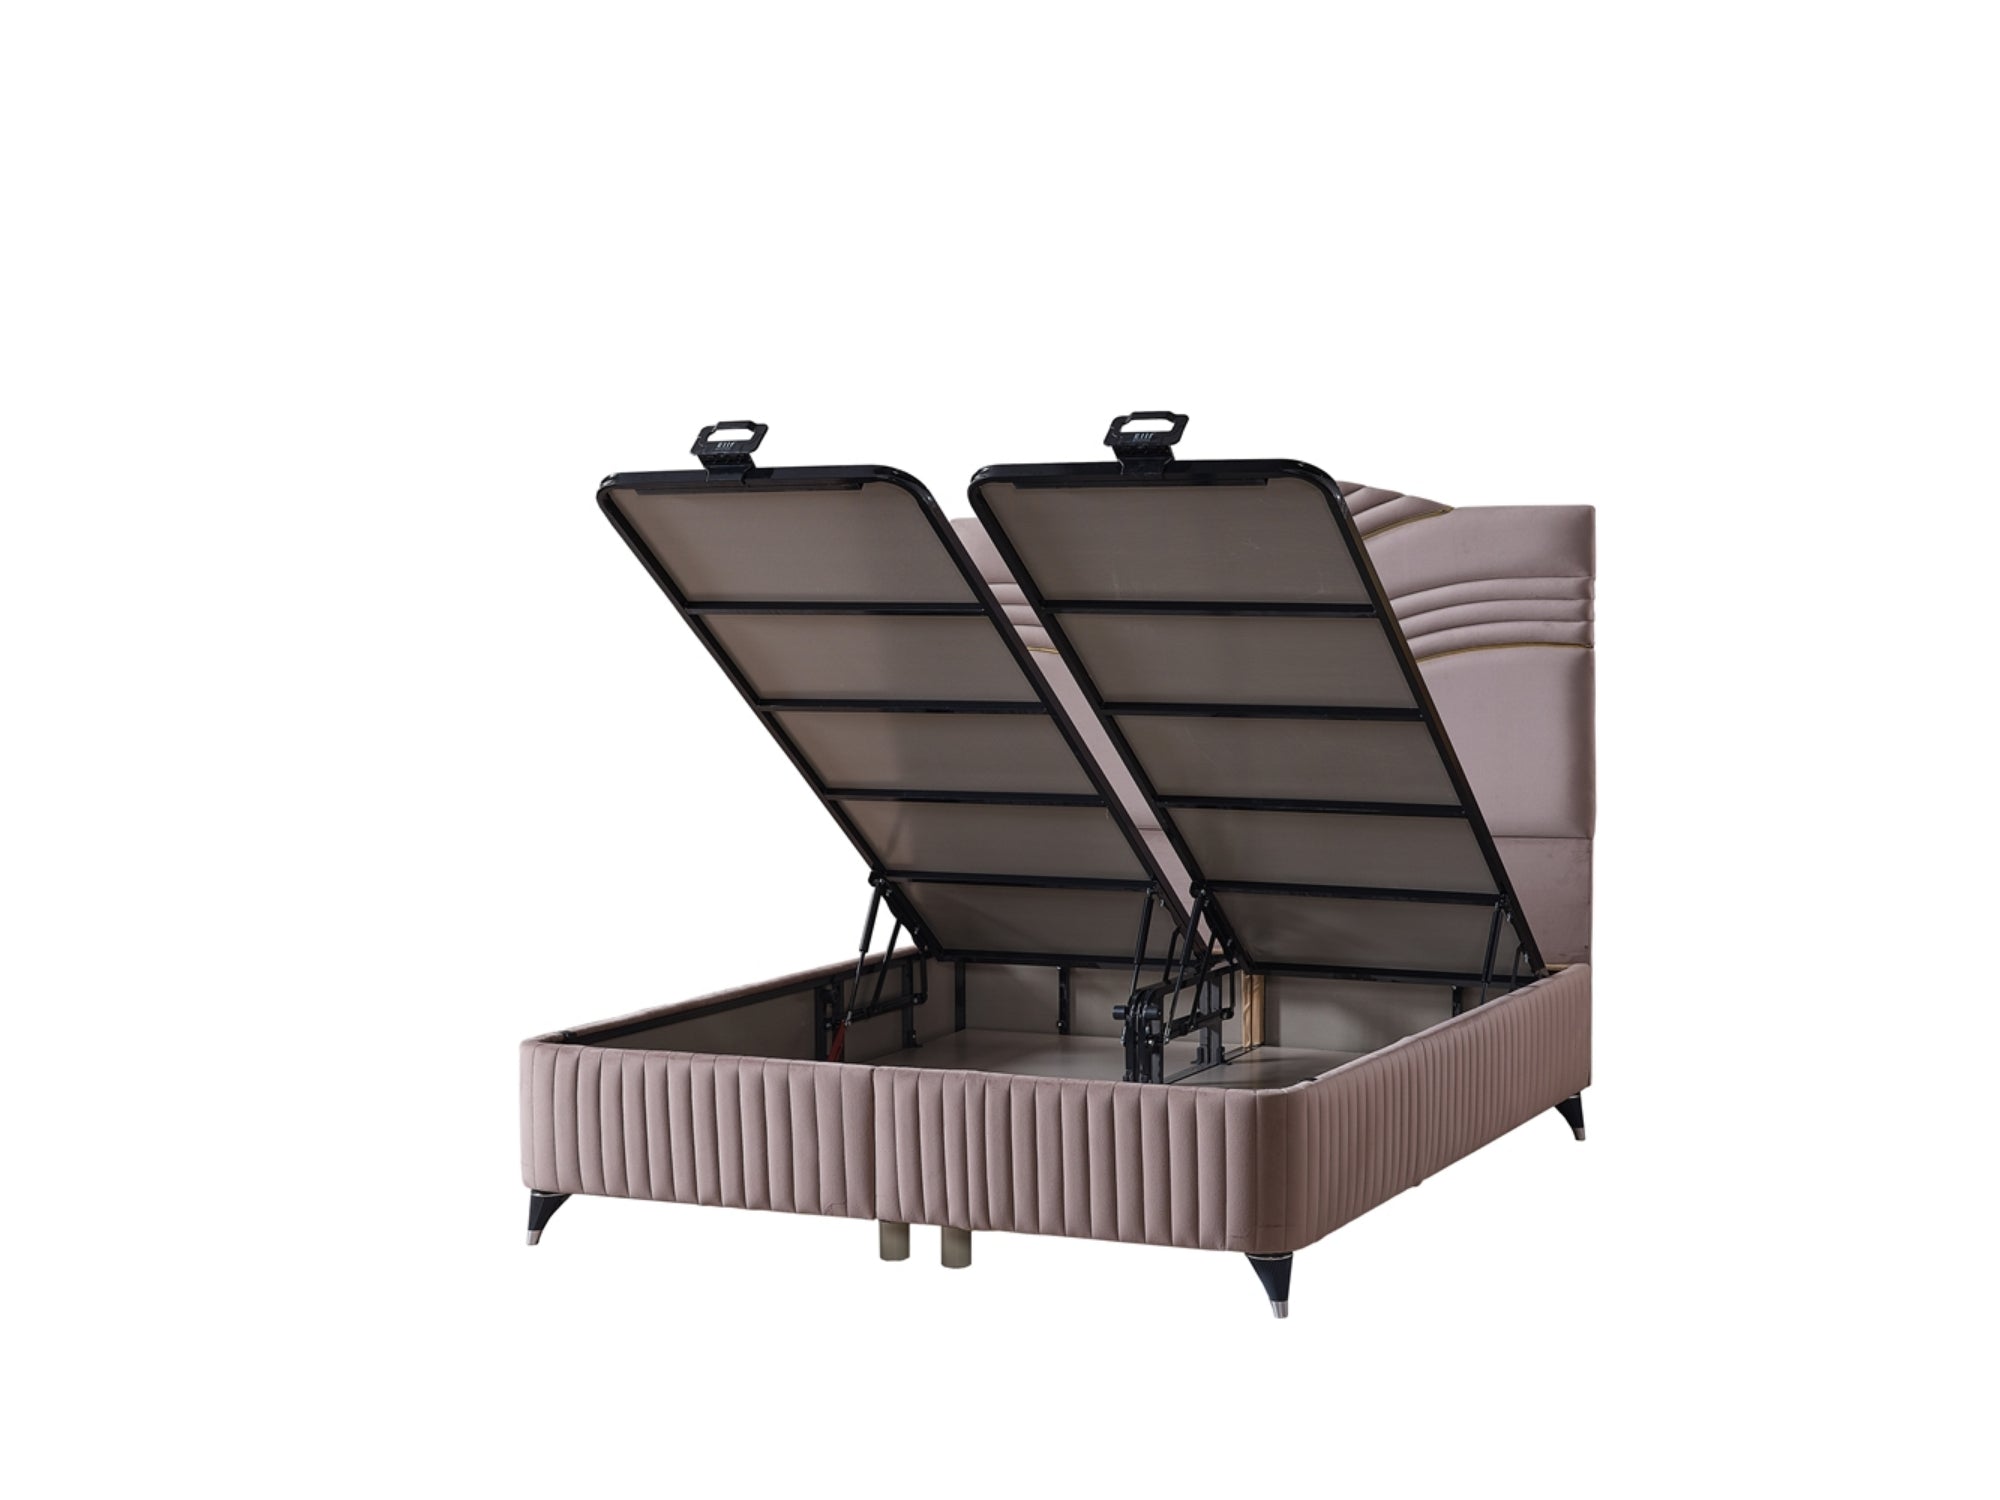 Cınar Storage Bed With Headboard Light Brown